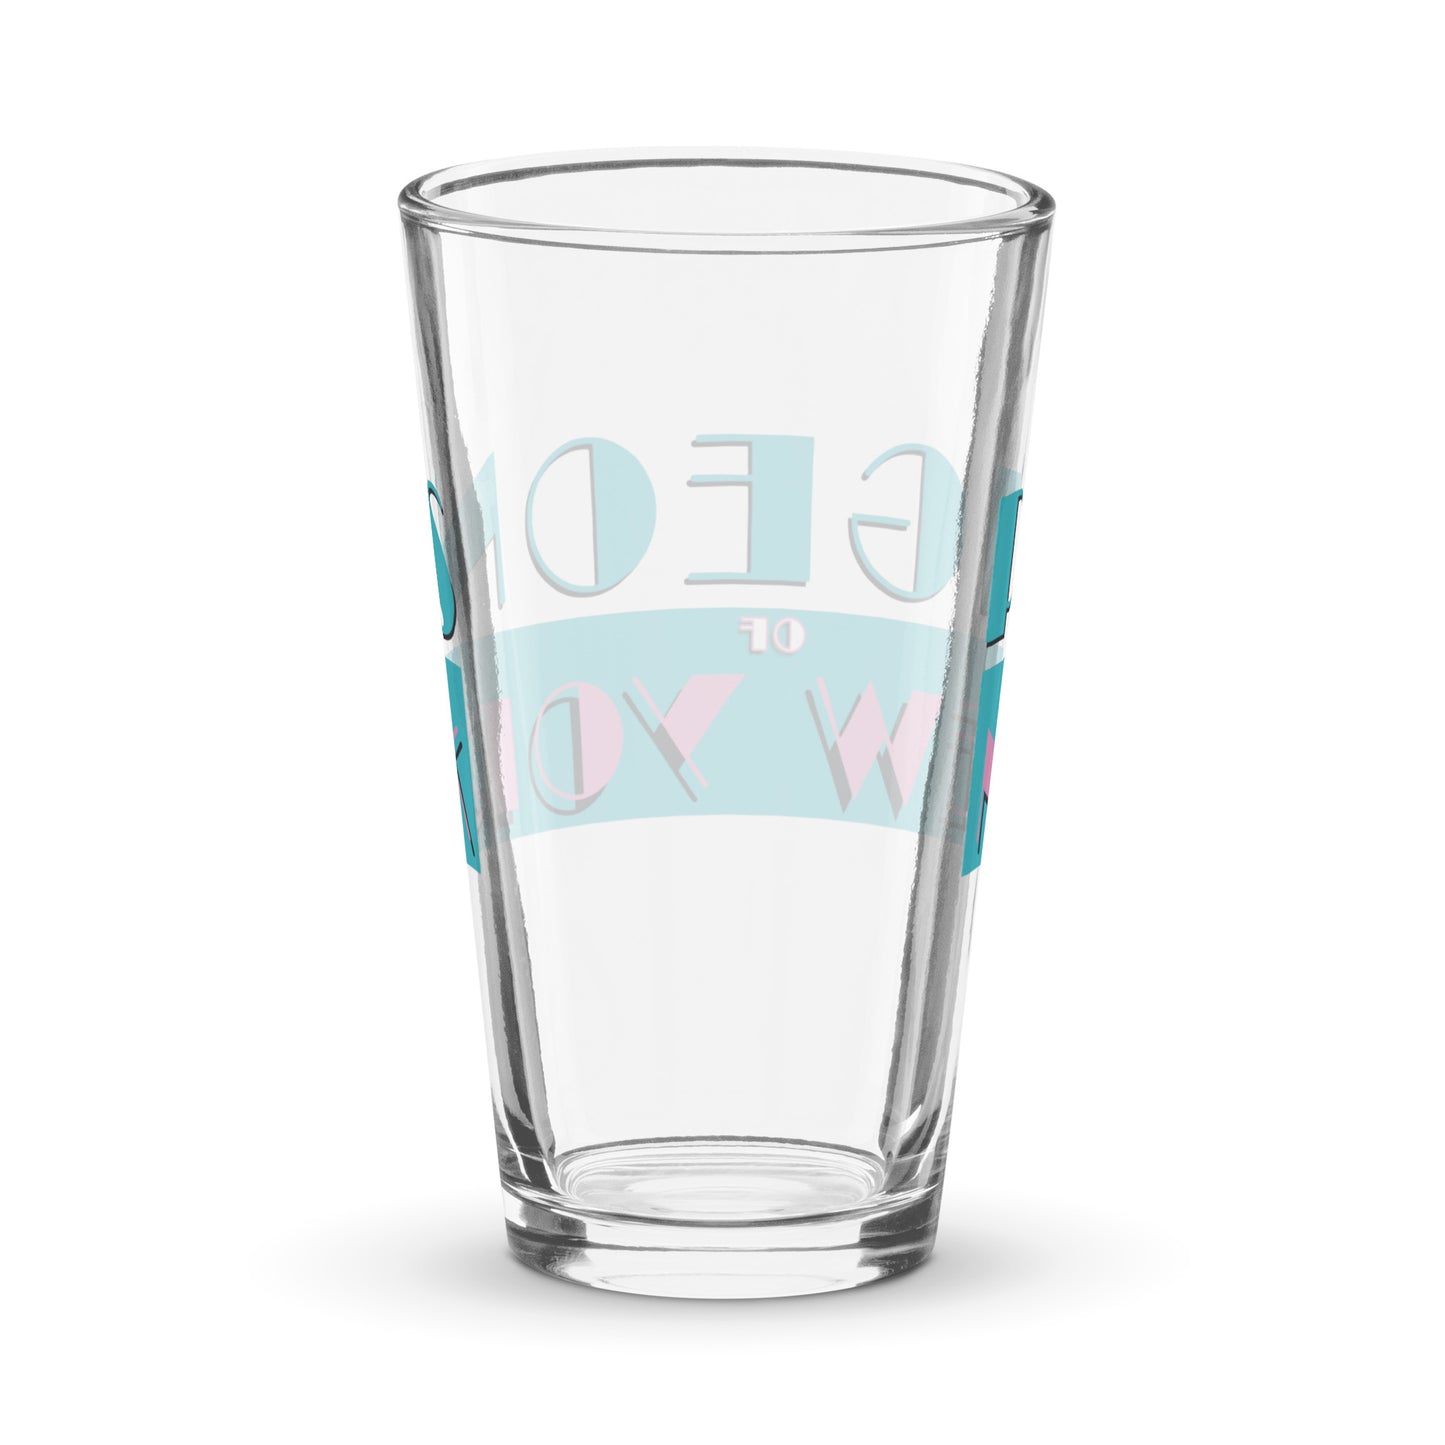 PoNY Vice Shaker pint glass